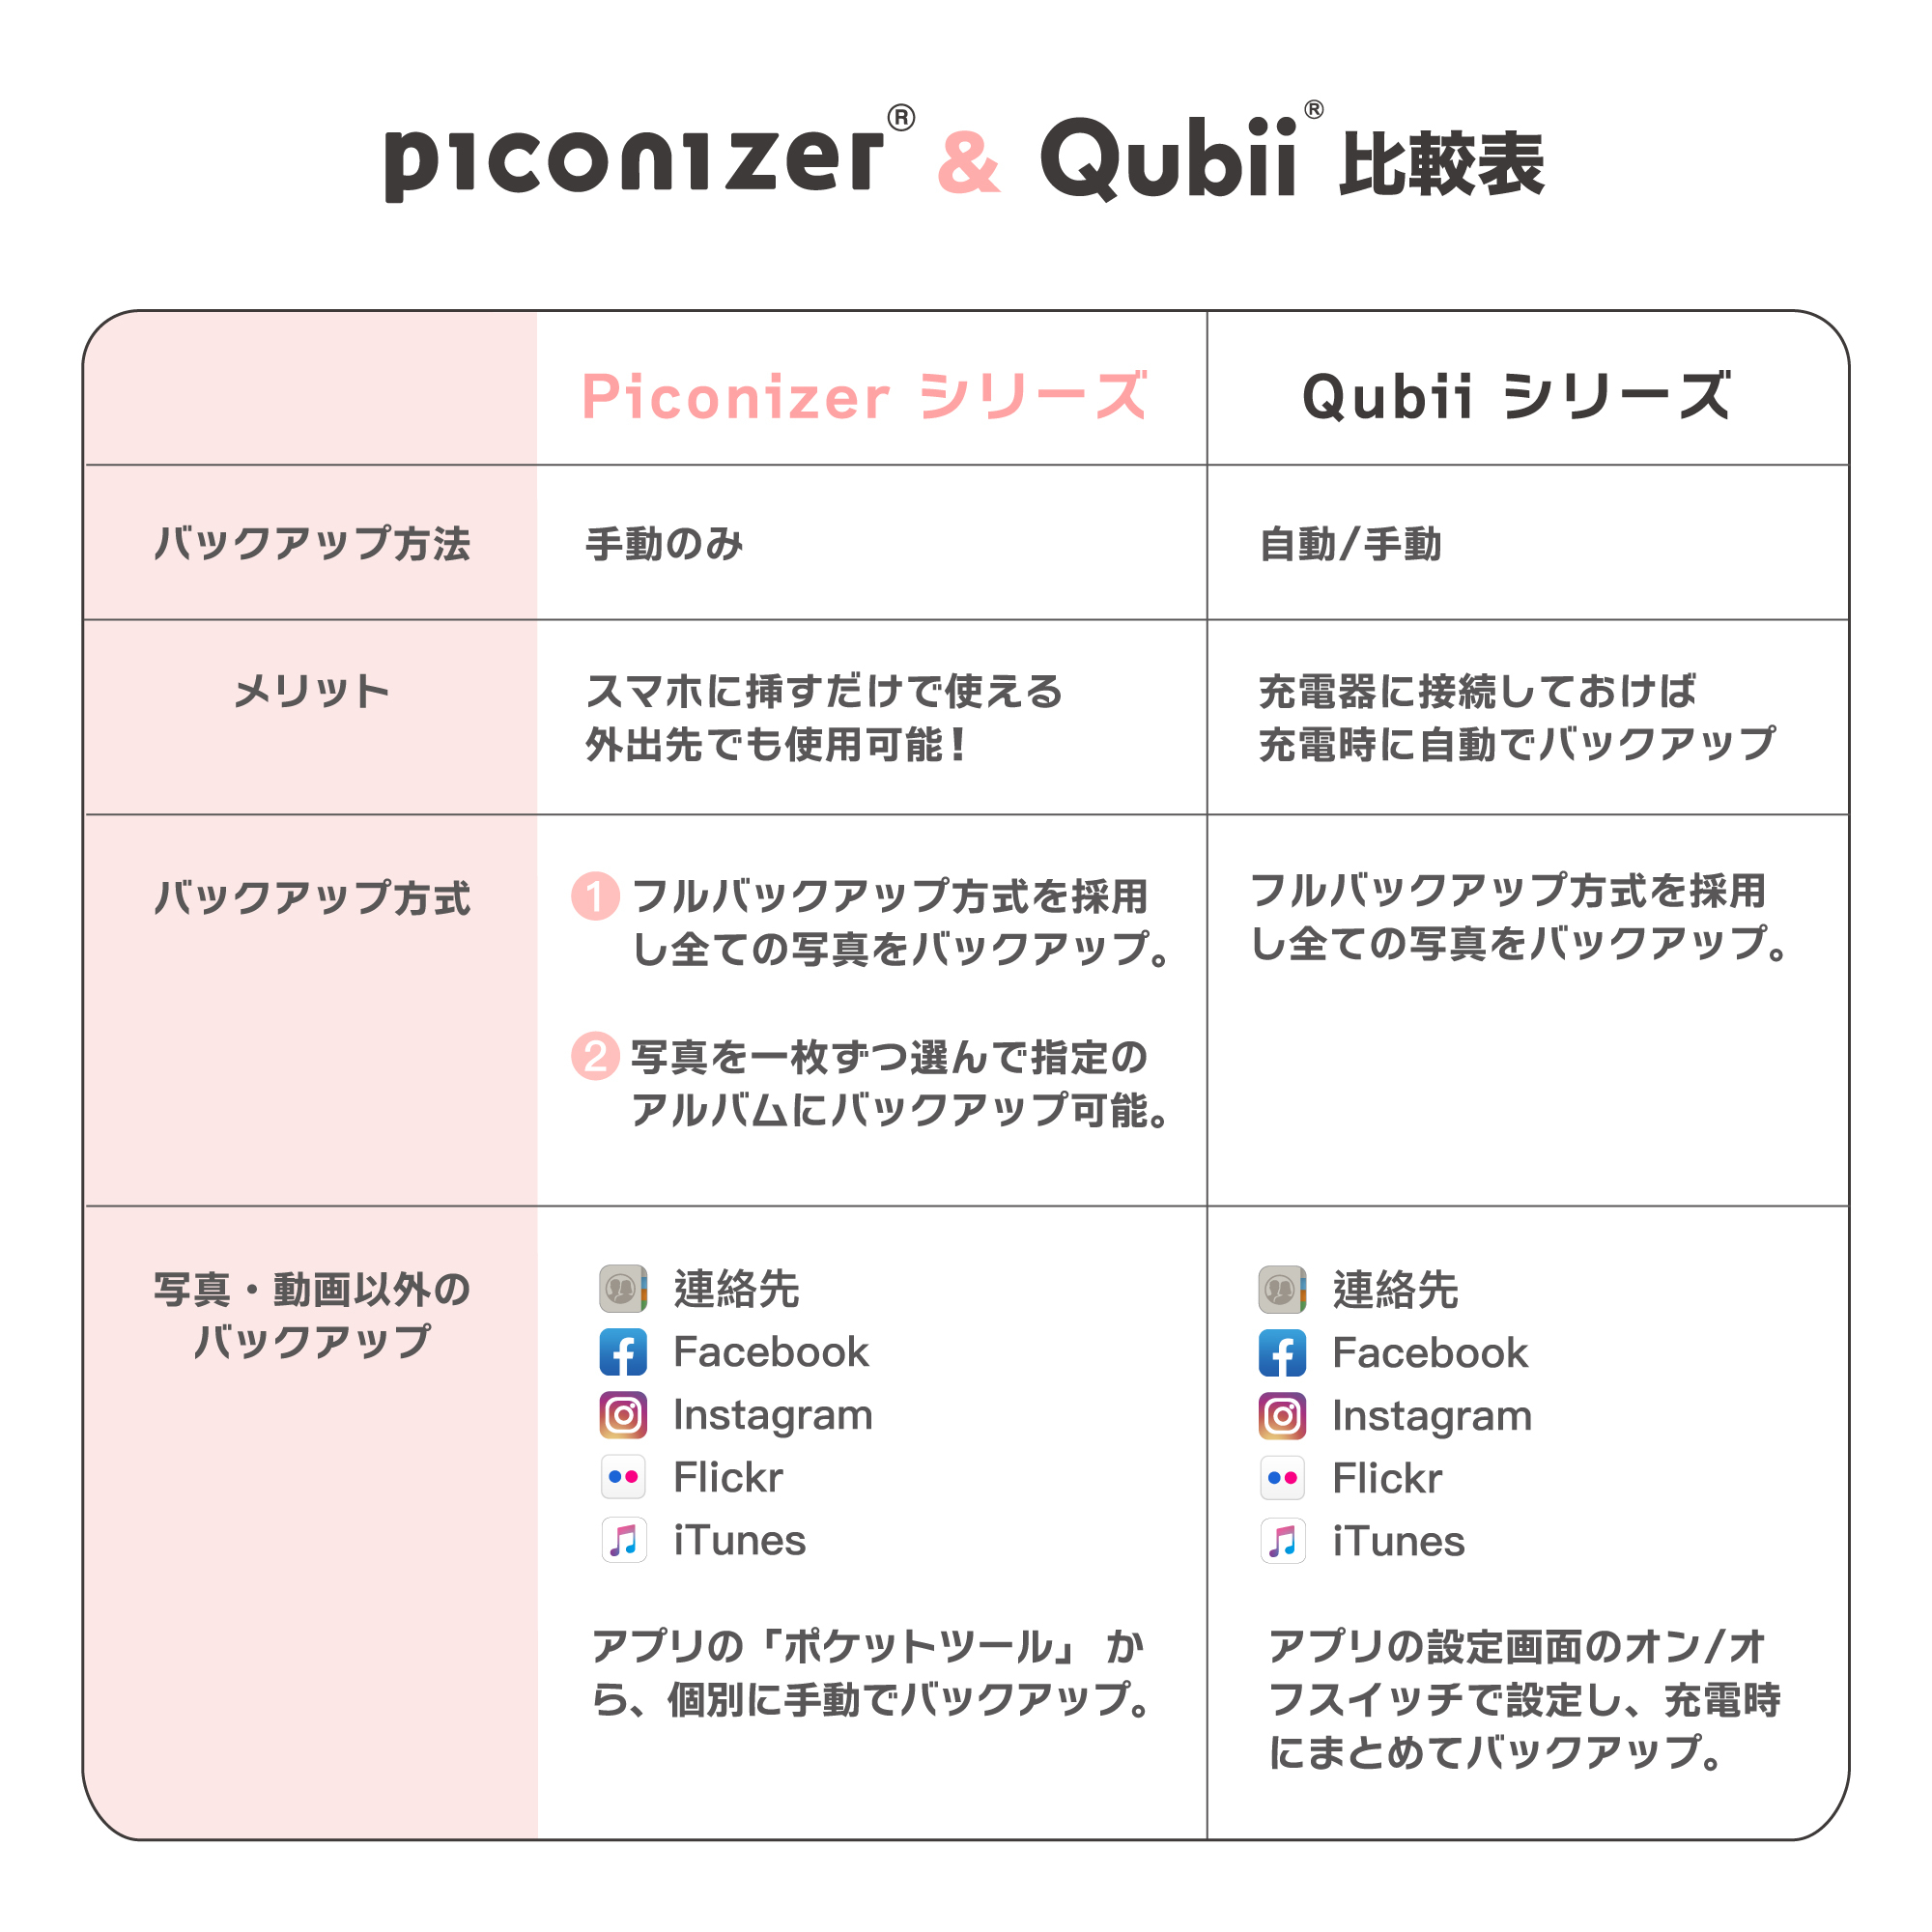 Piconizer&Qubii比較表.jpg